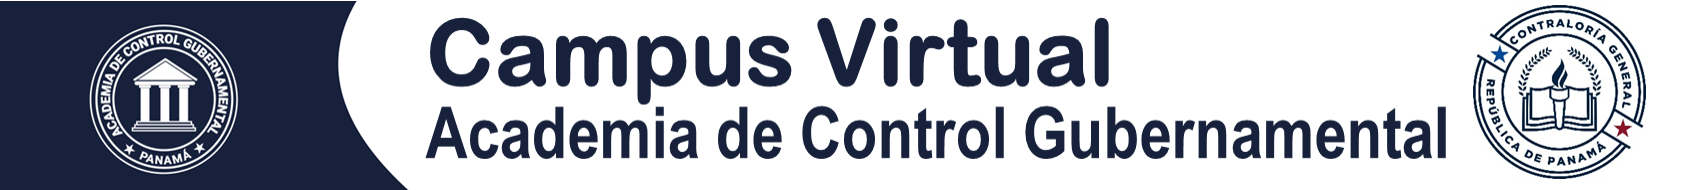 Academia de Control Gubernamental - Campus Virtual